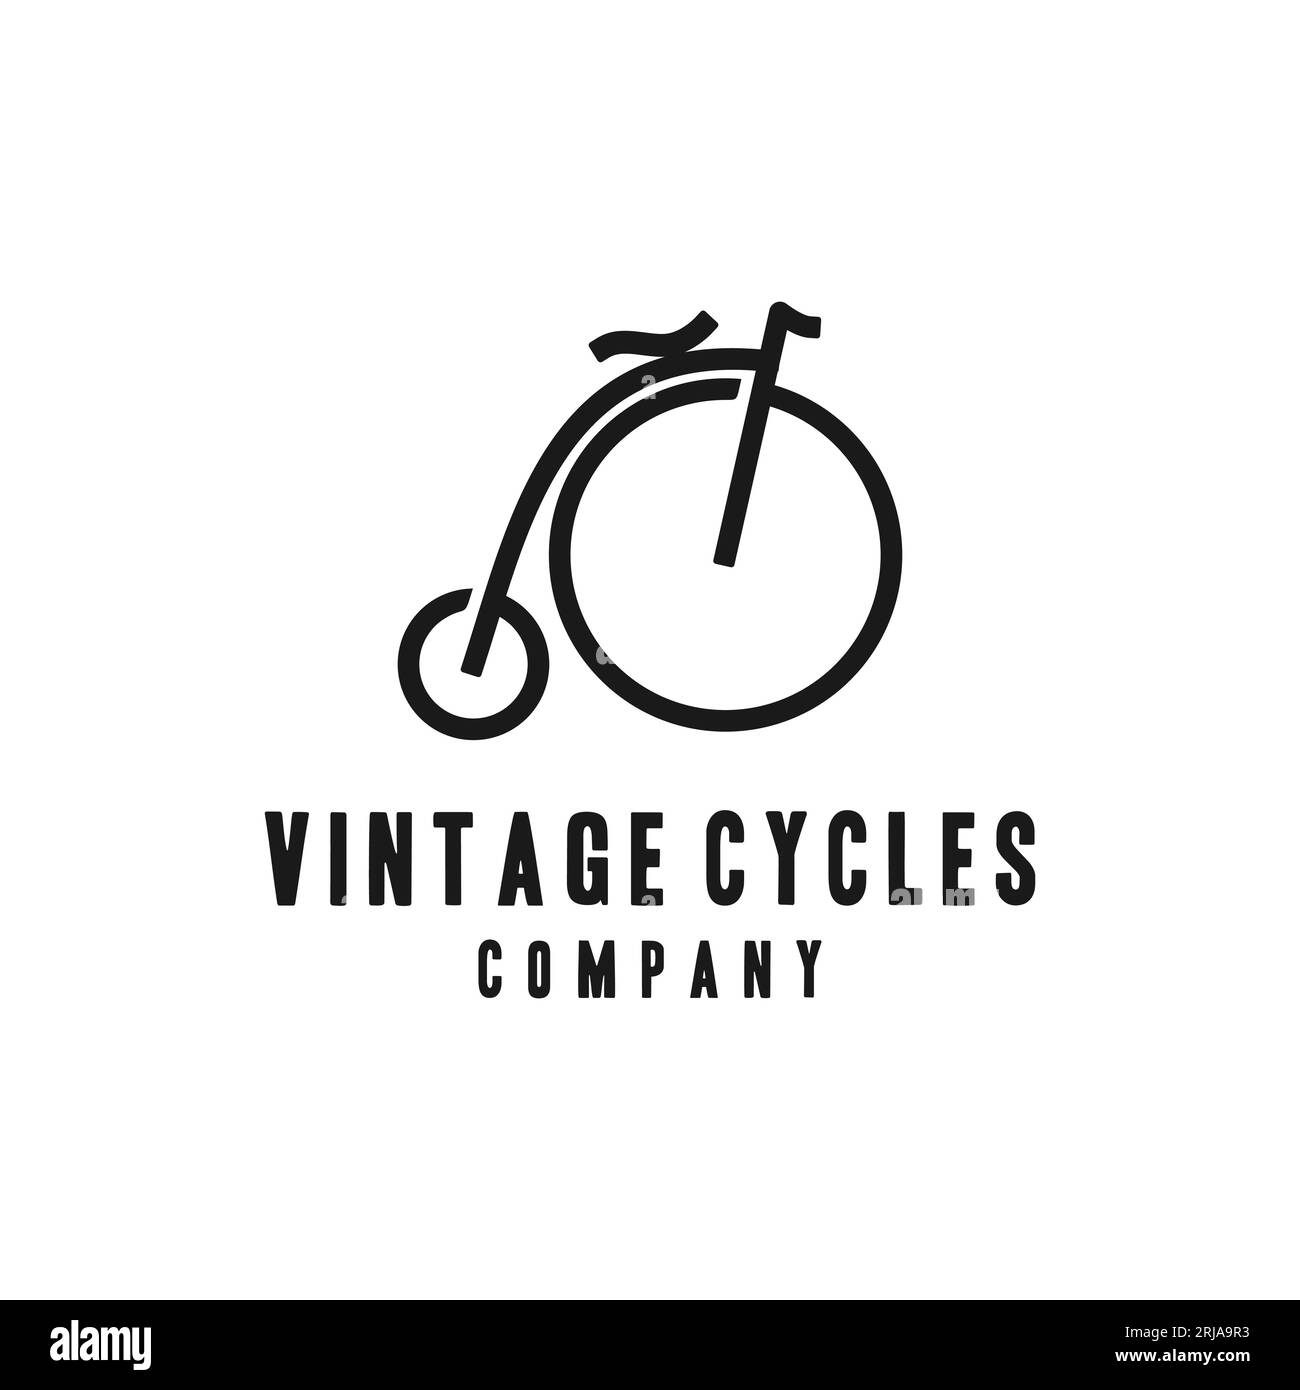 Design-Inspiration Für Das Vintage Cycle Bike Logo Stock Vektor